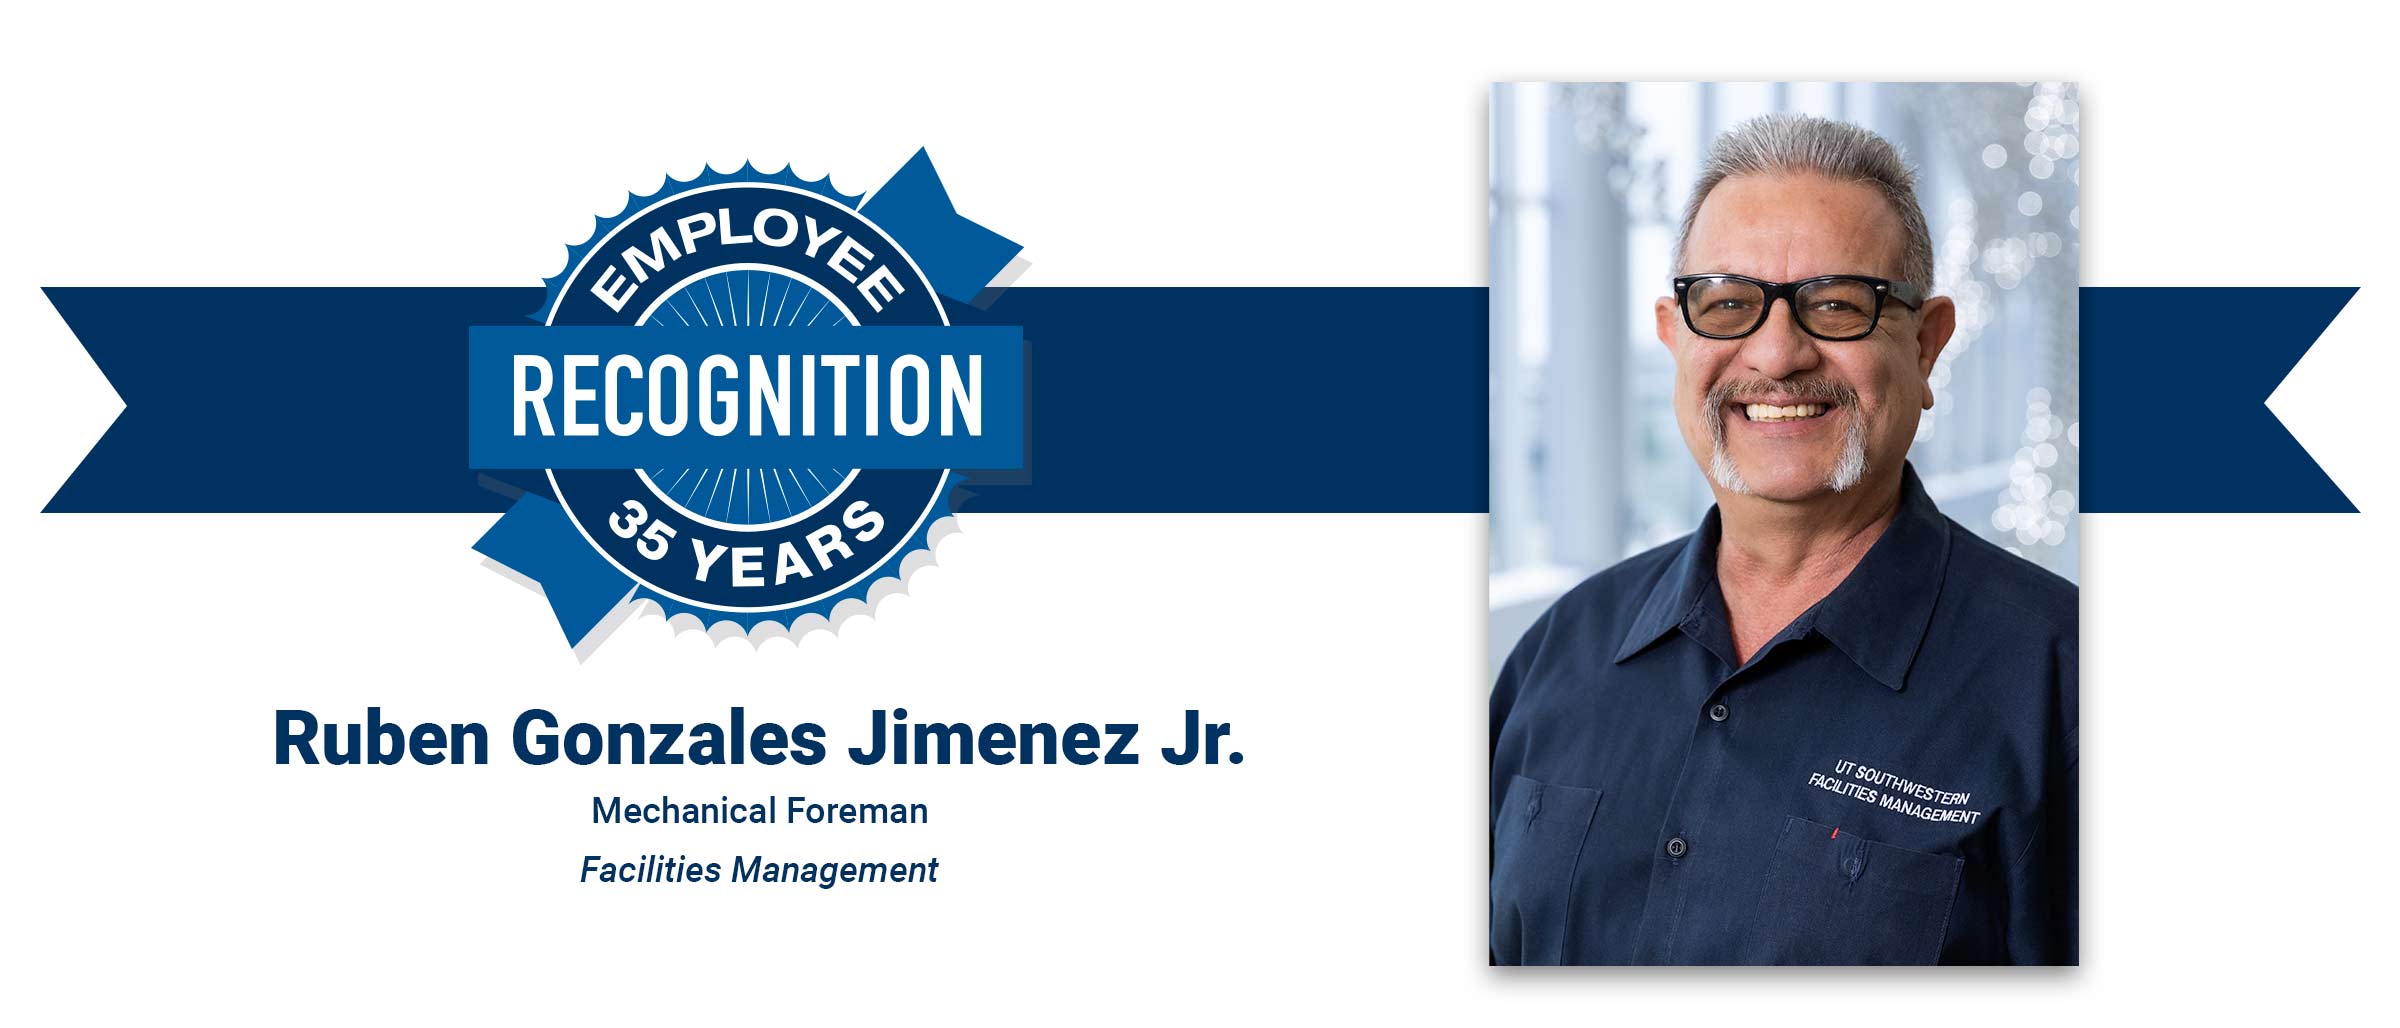 Man wearing glasses with short grey hair, grey goatee, wearing blue UTSW facilities shirt. Ruben Gonzales Jimenez Jr., 35 years employee recognition